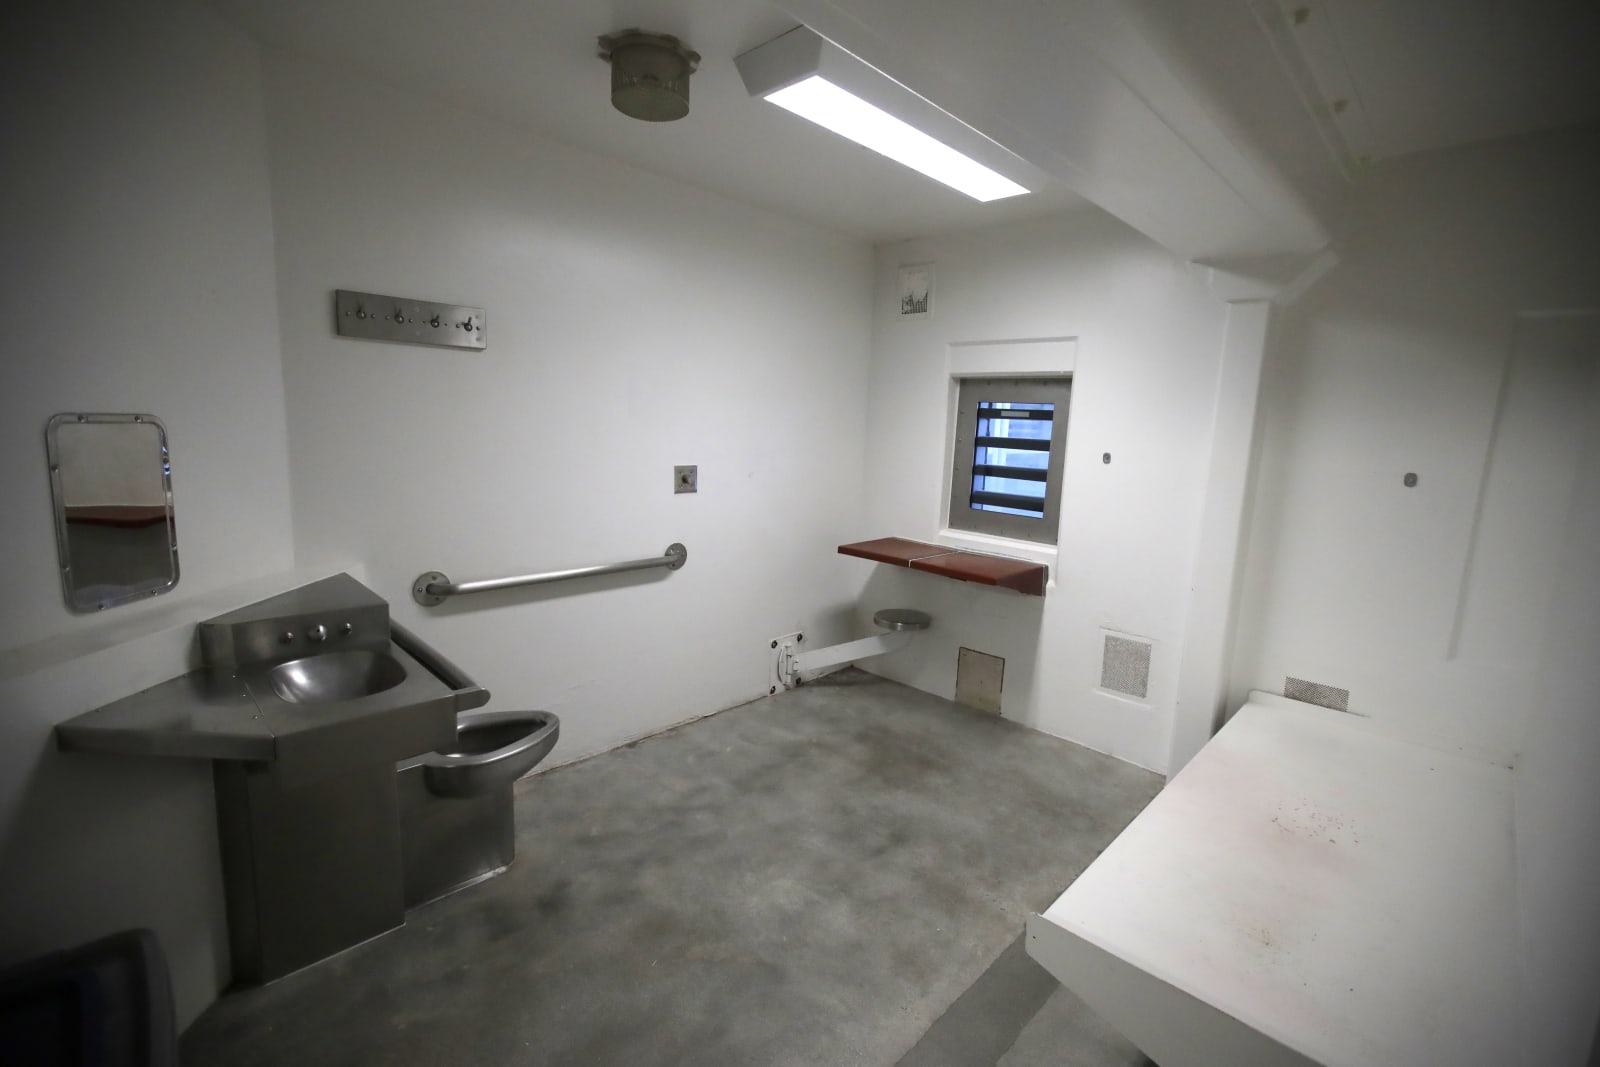 California Jails Solitary Confinement